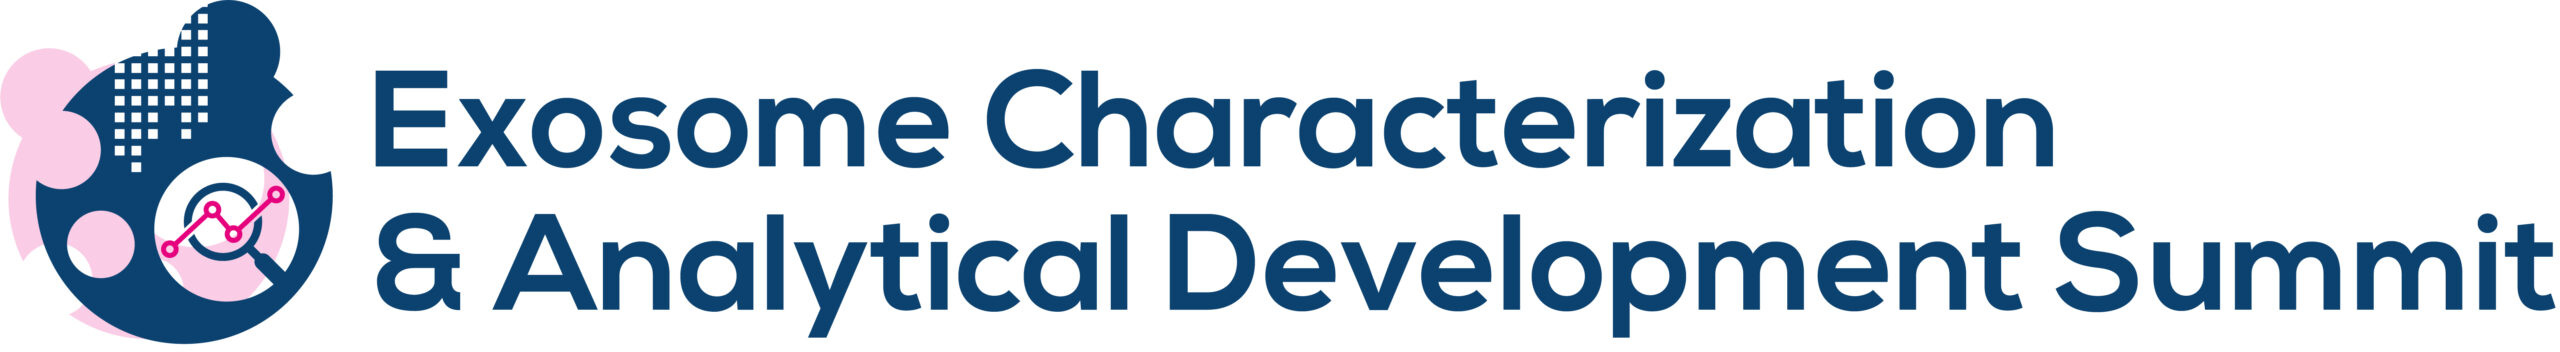 Exosome Characterization & Analytical Development Summit Logo